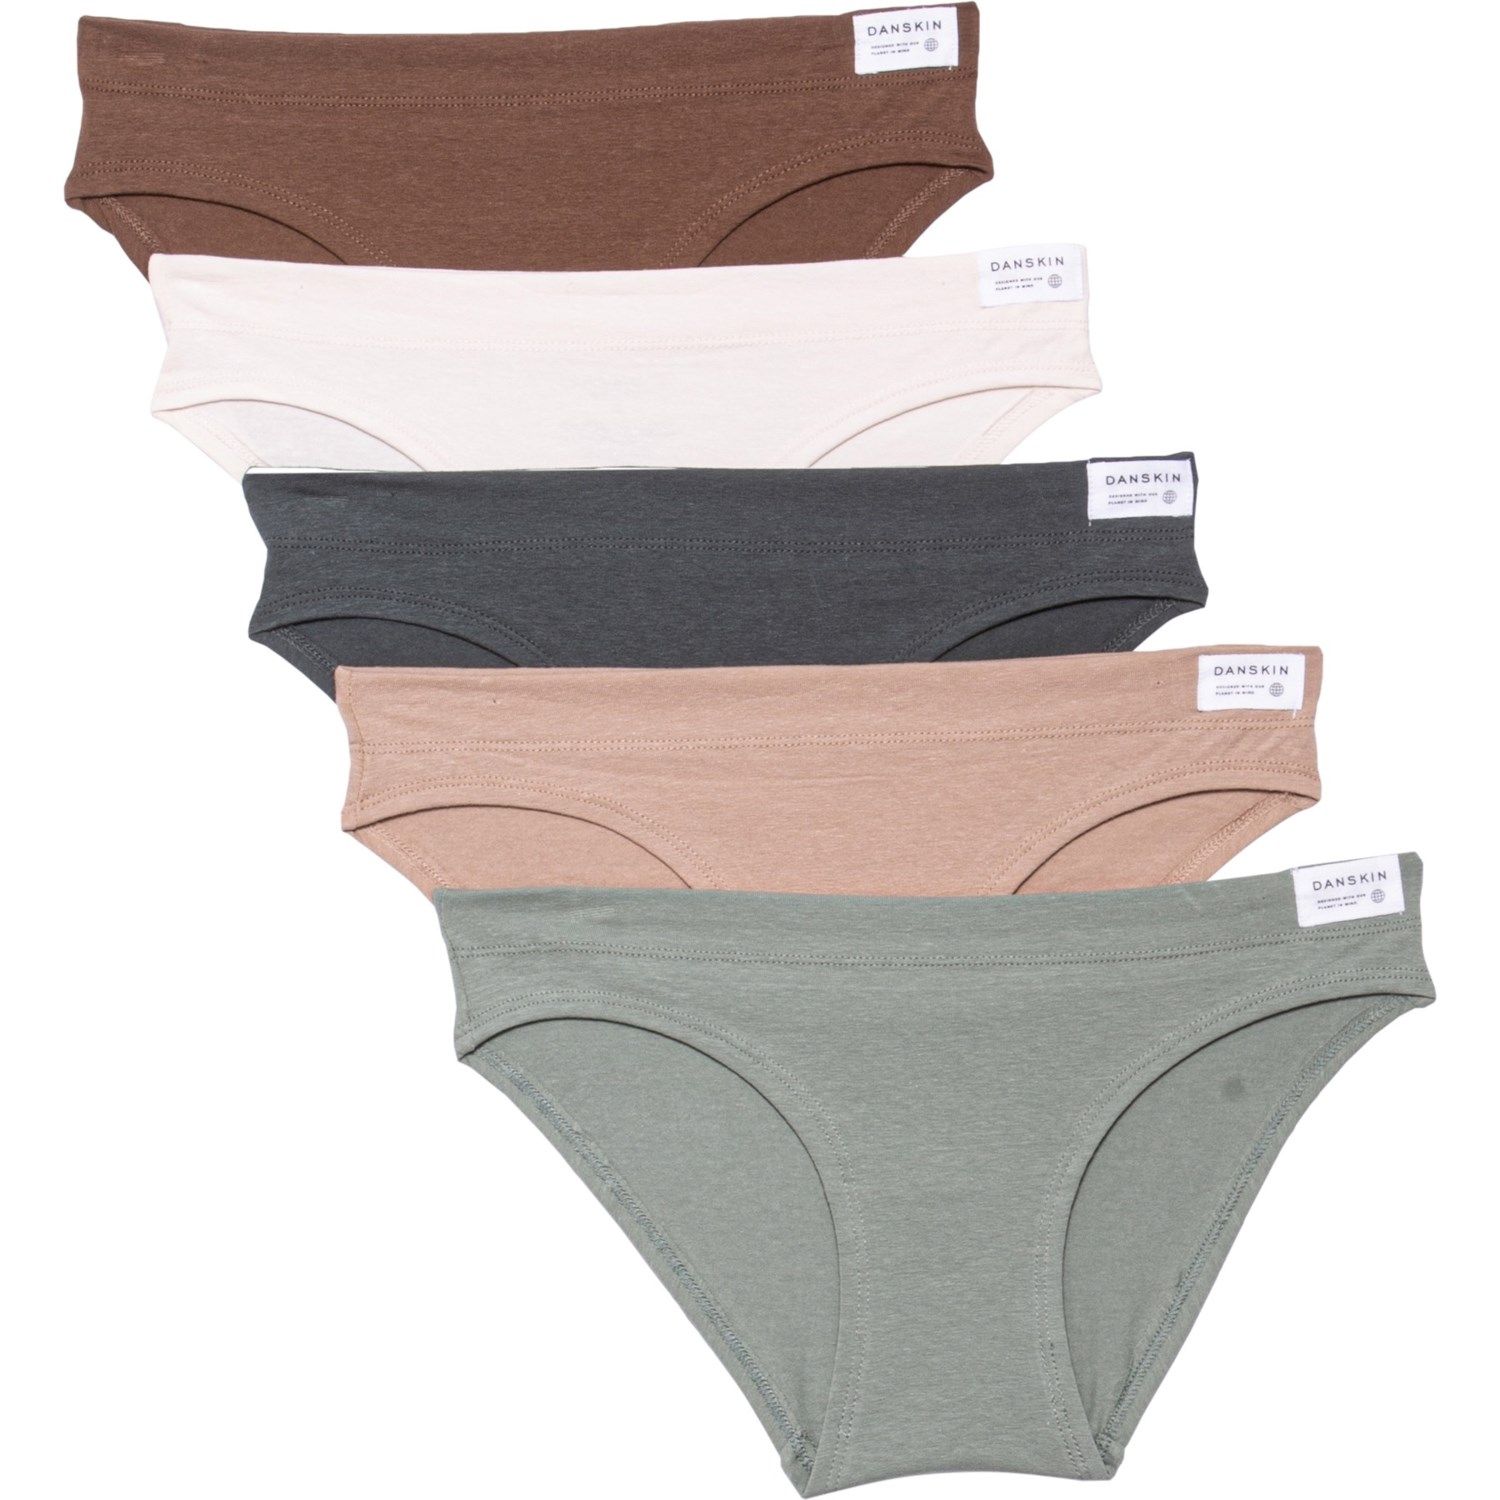 Danskin Organic Cotton Panties - 5-Pack, Bikini Briefs - Save 64%